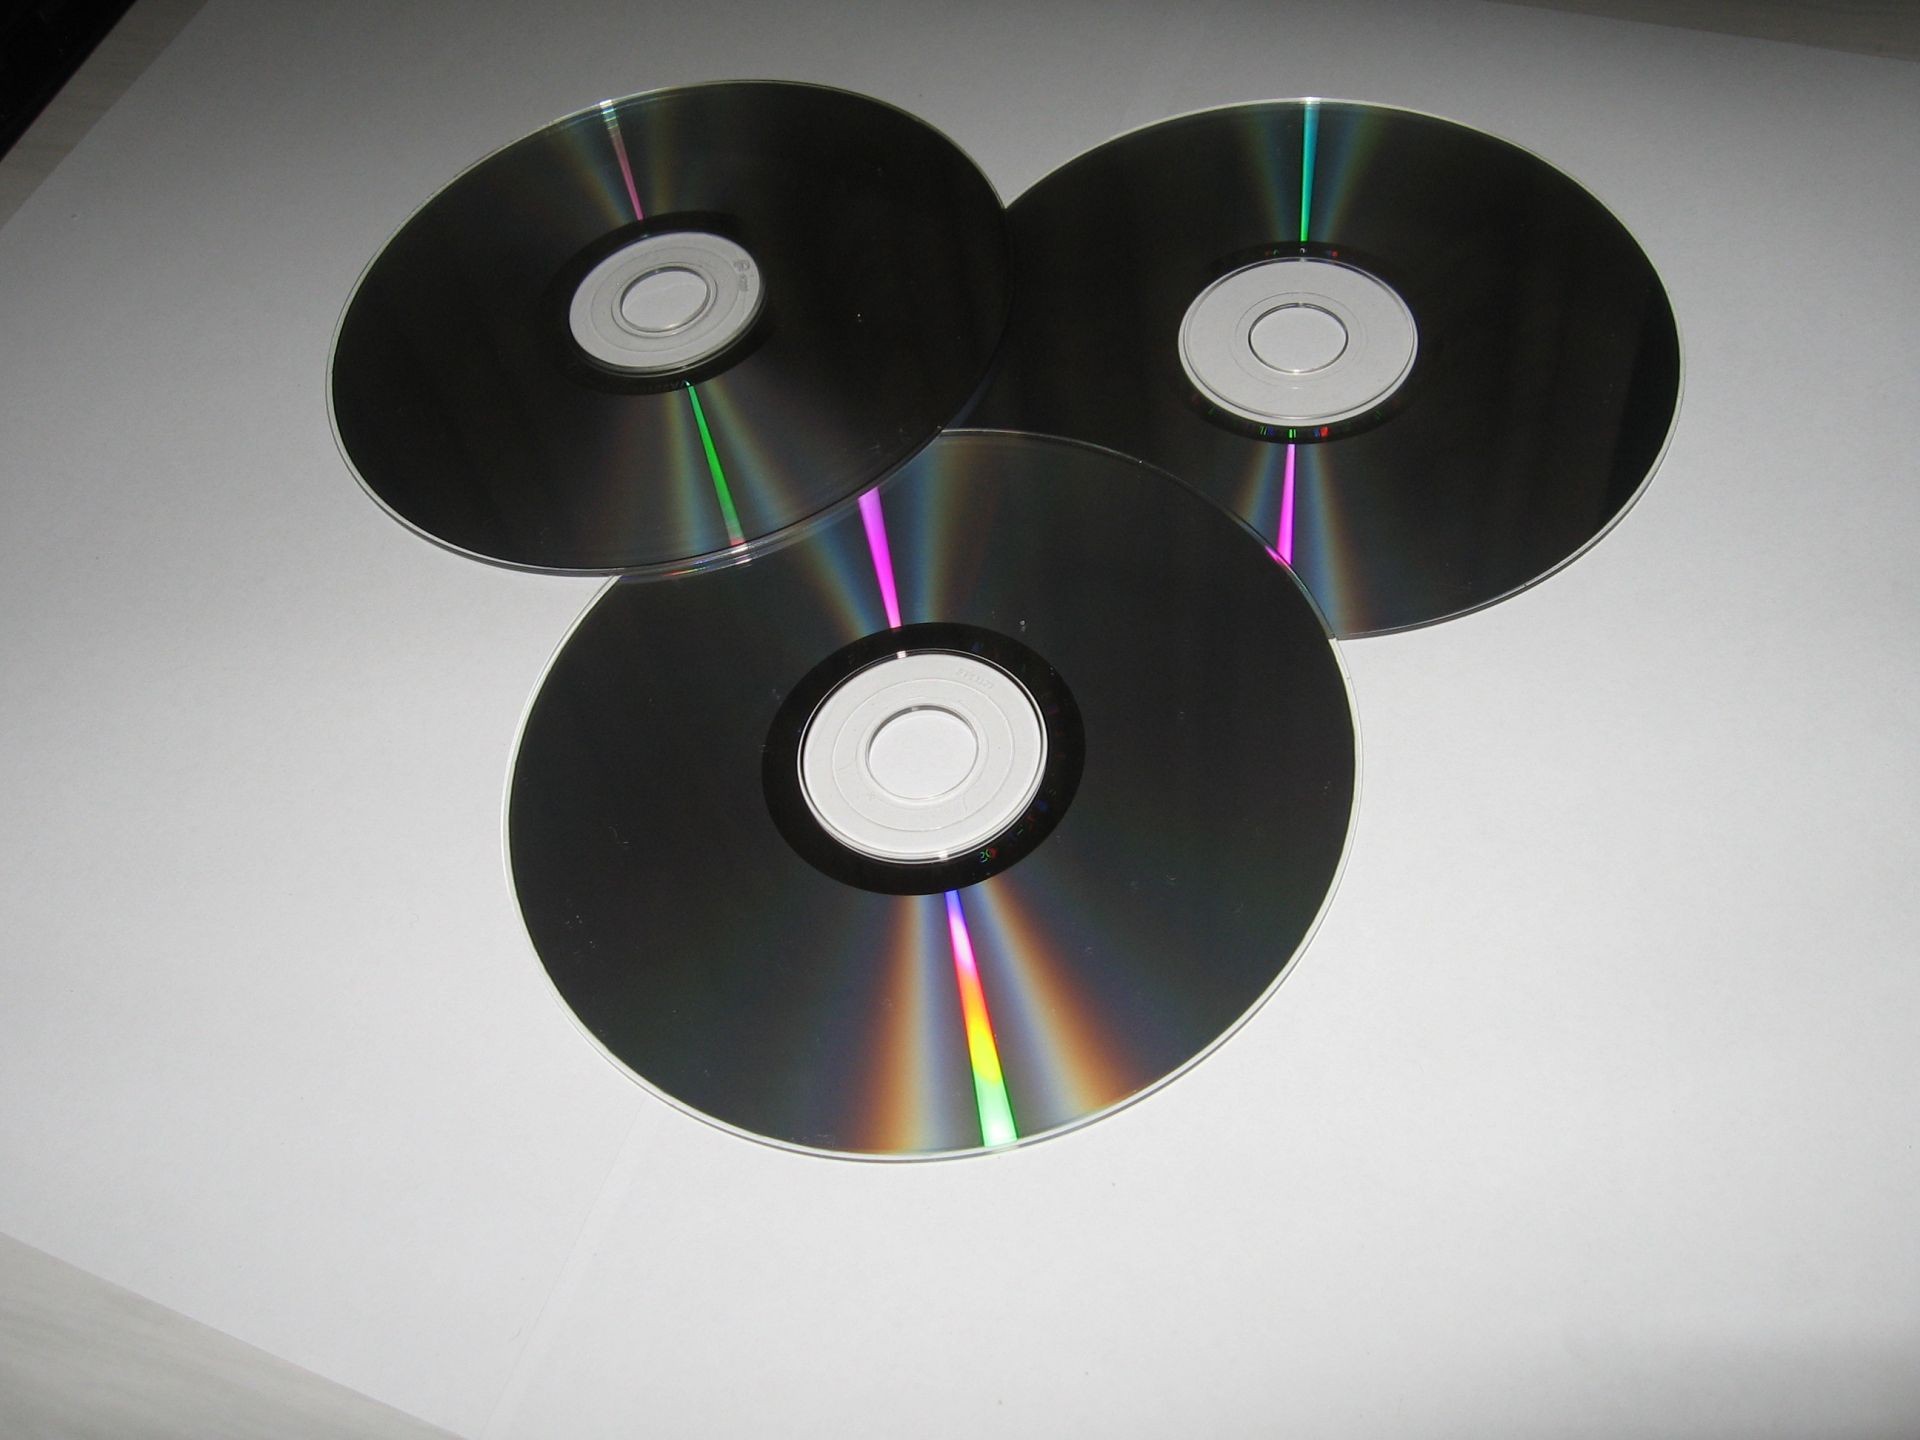 The Three CDs